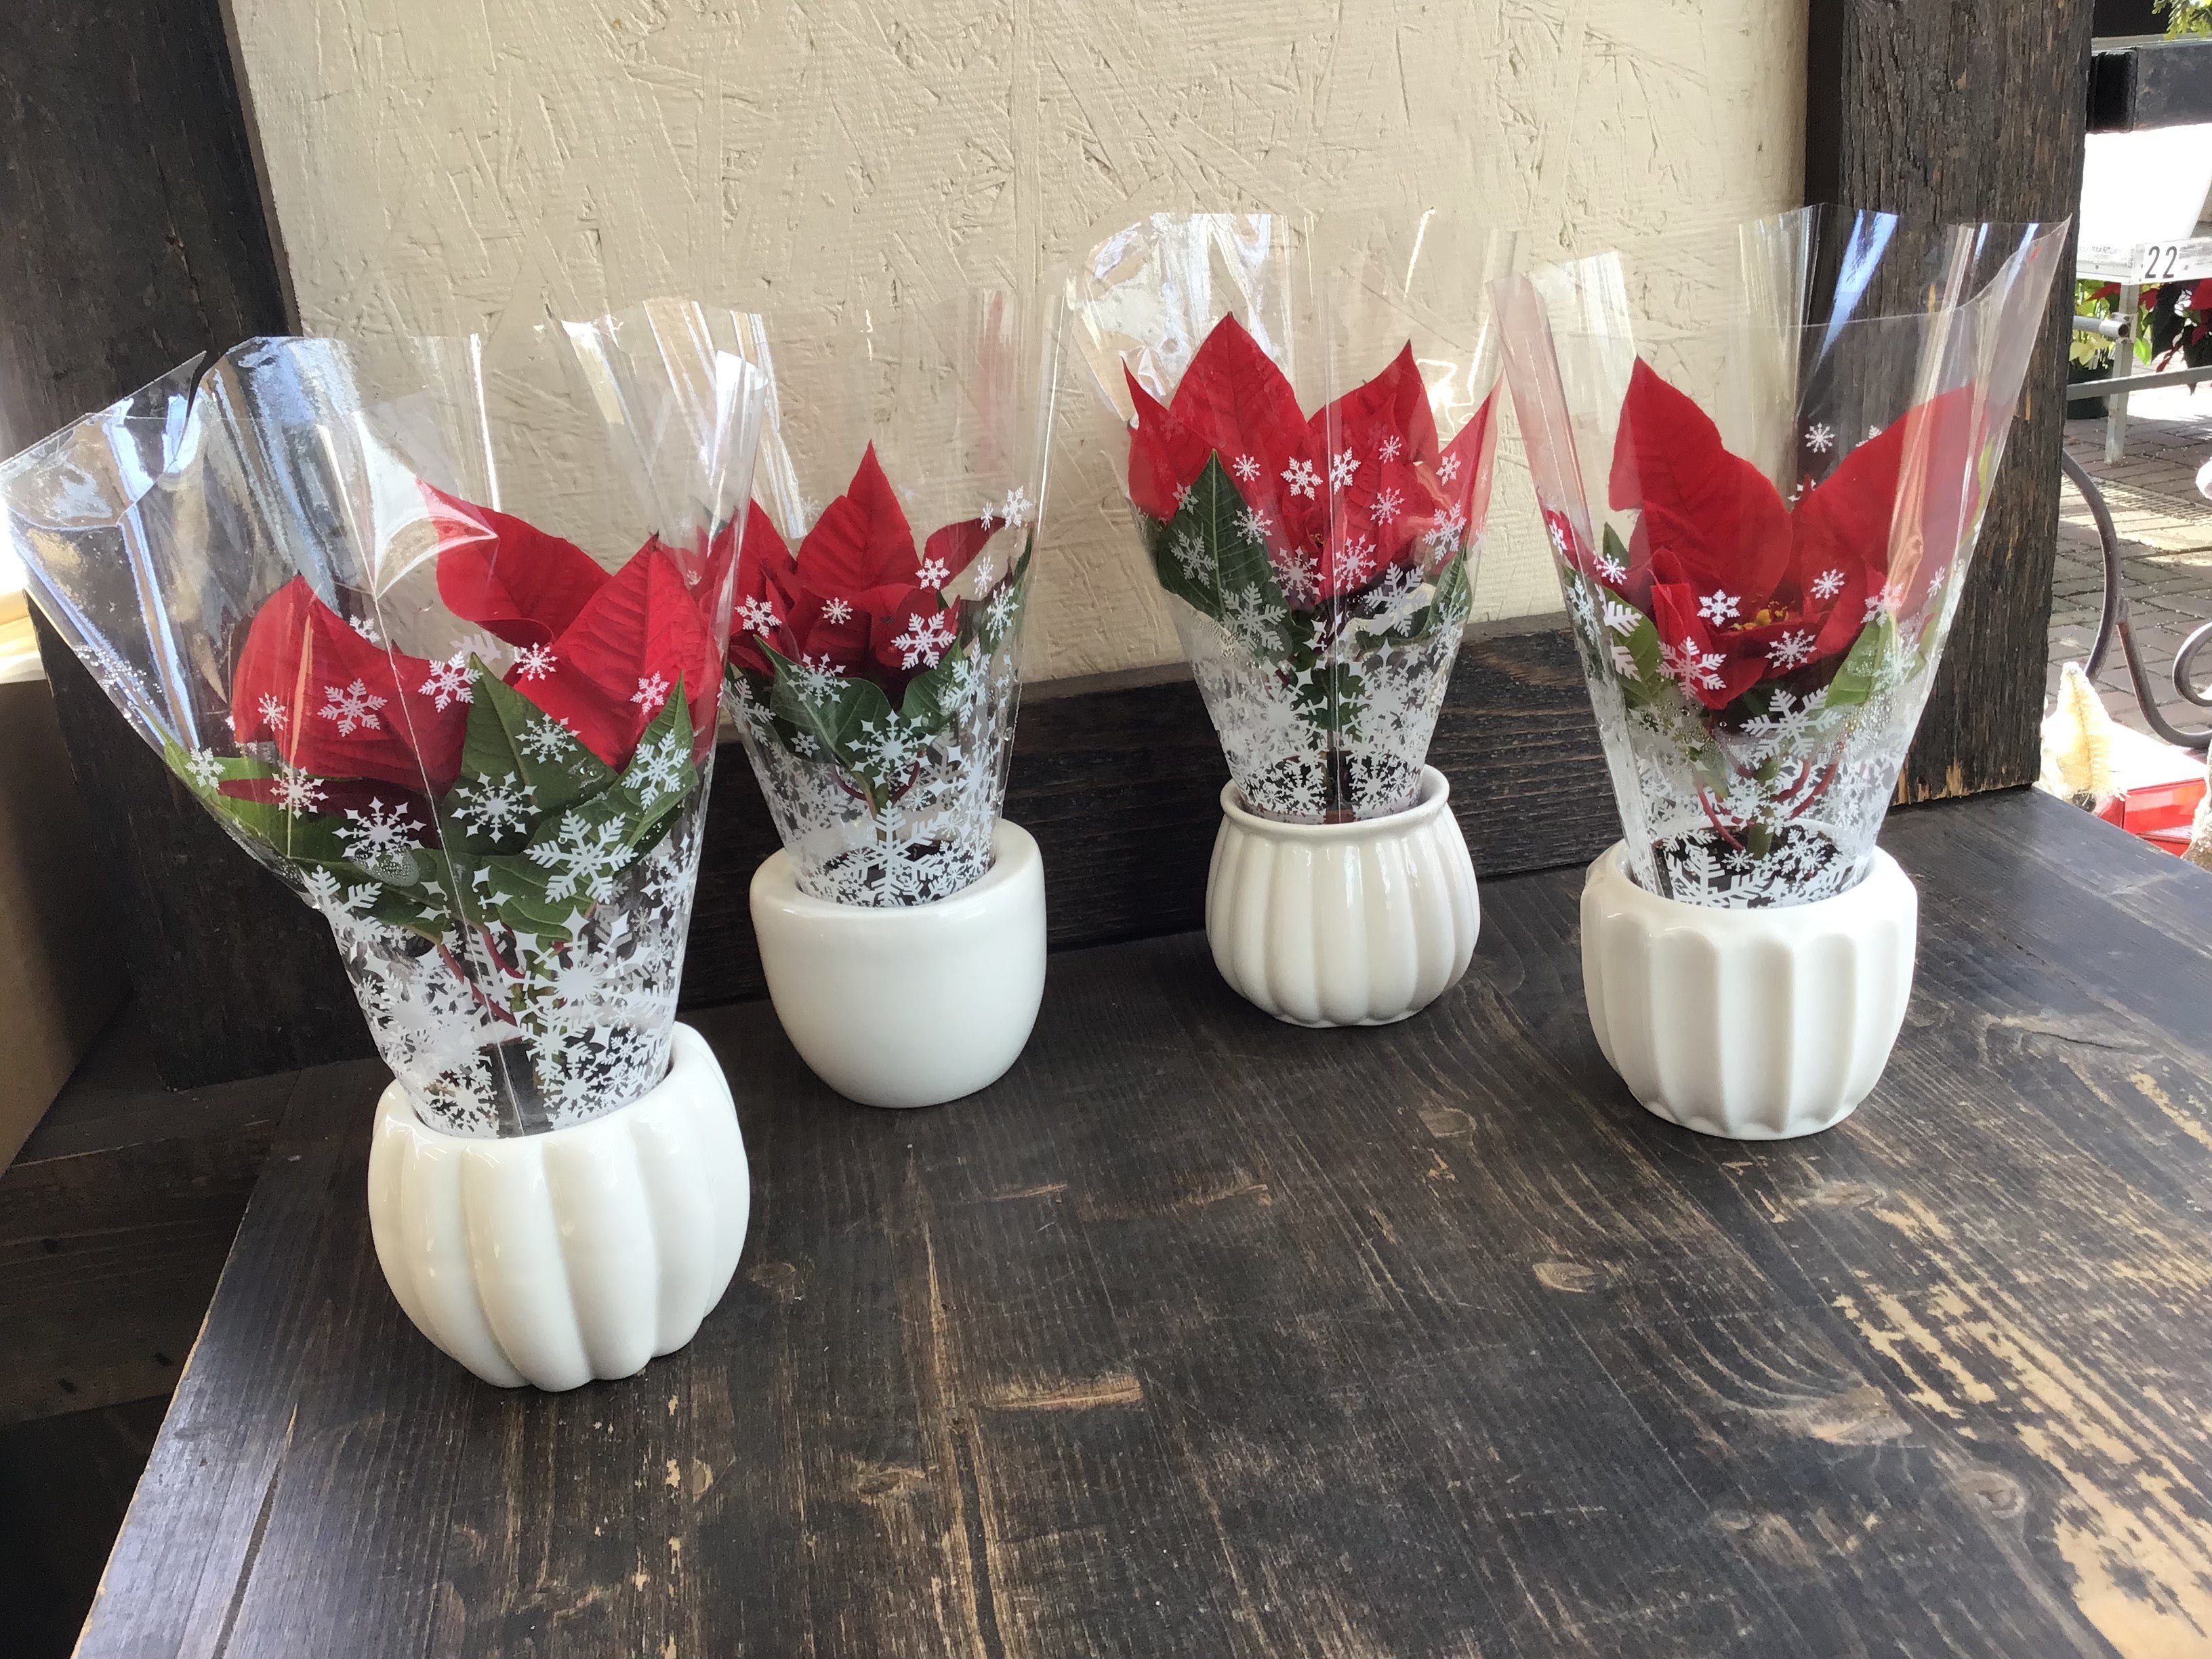 Poinsettia 2" in White Bulb Vase